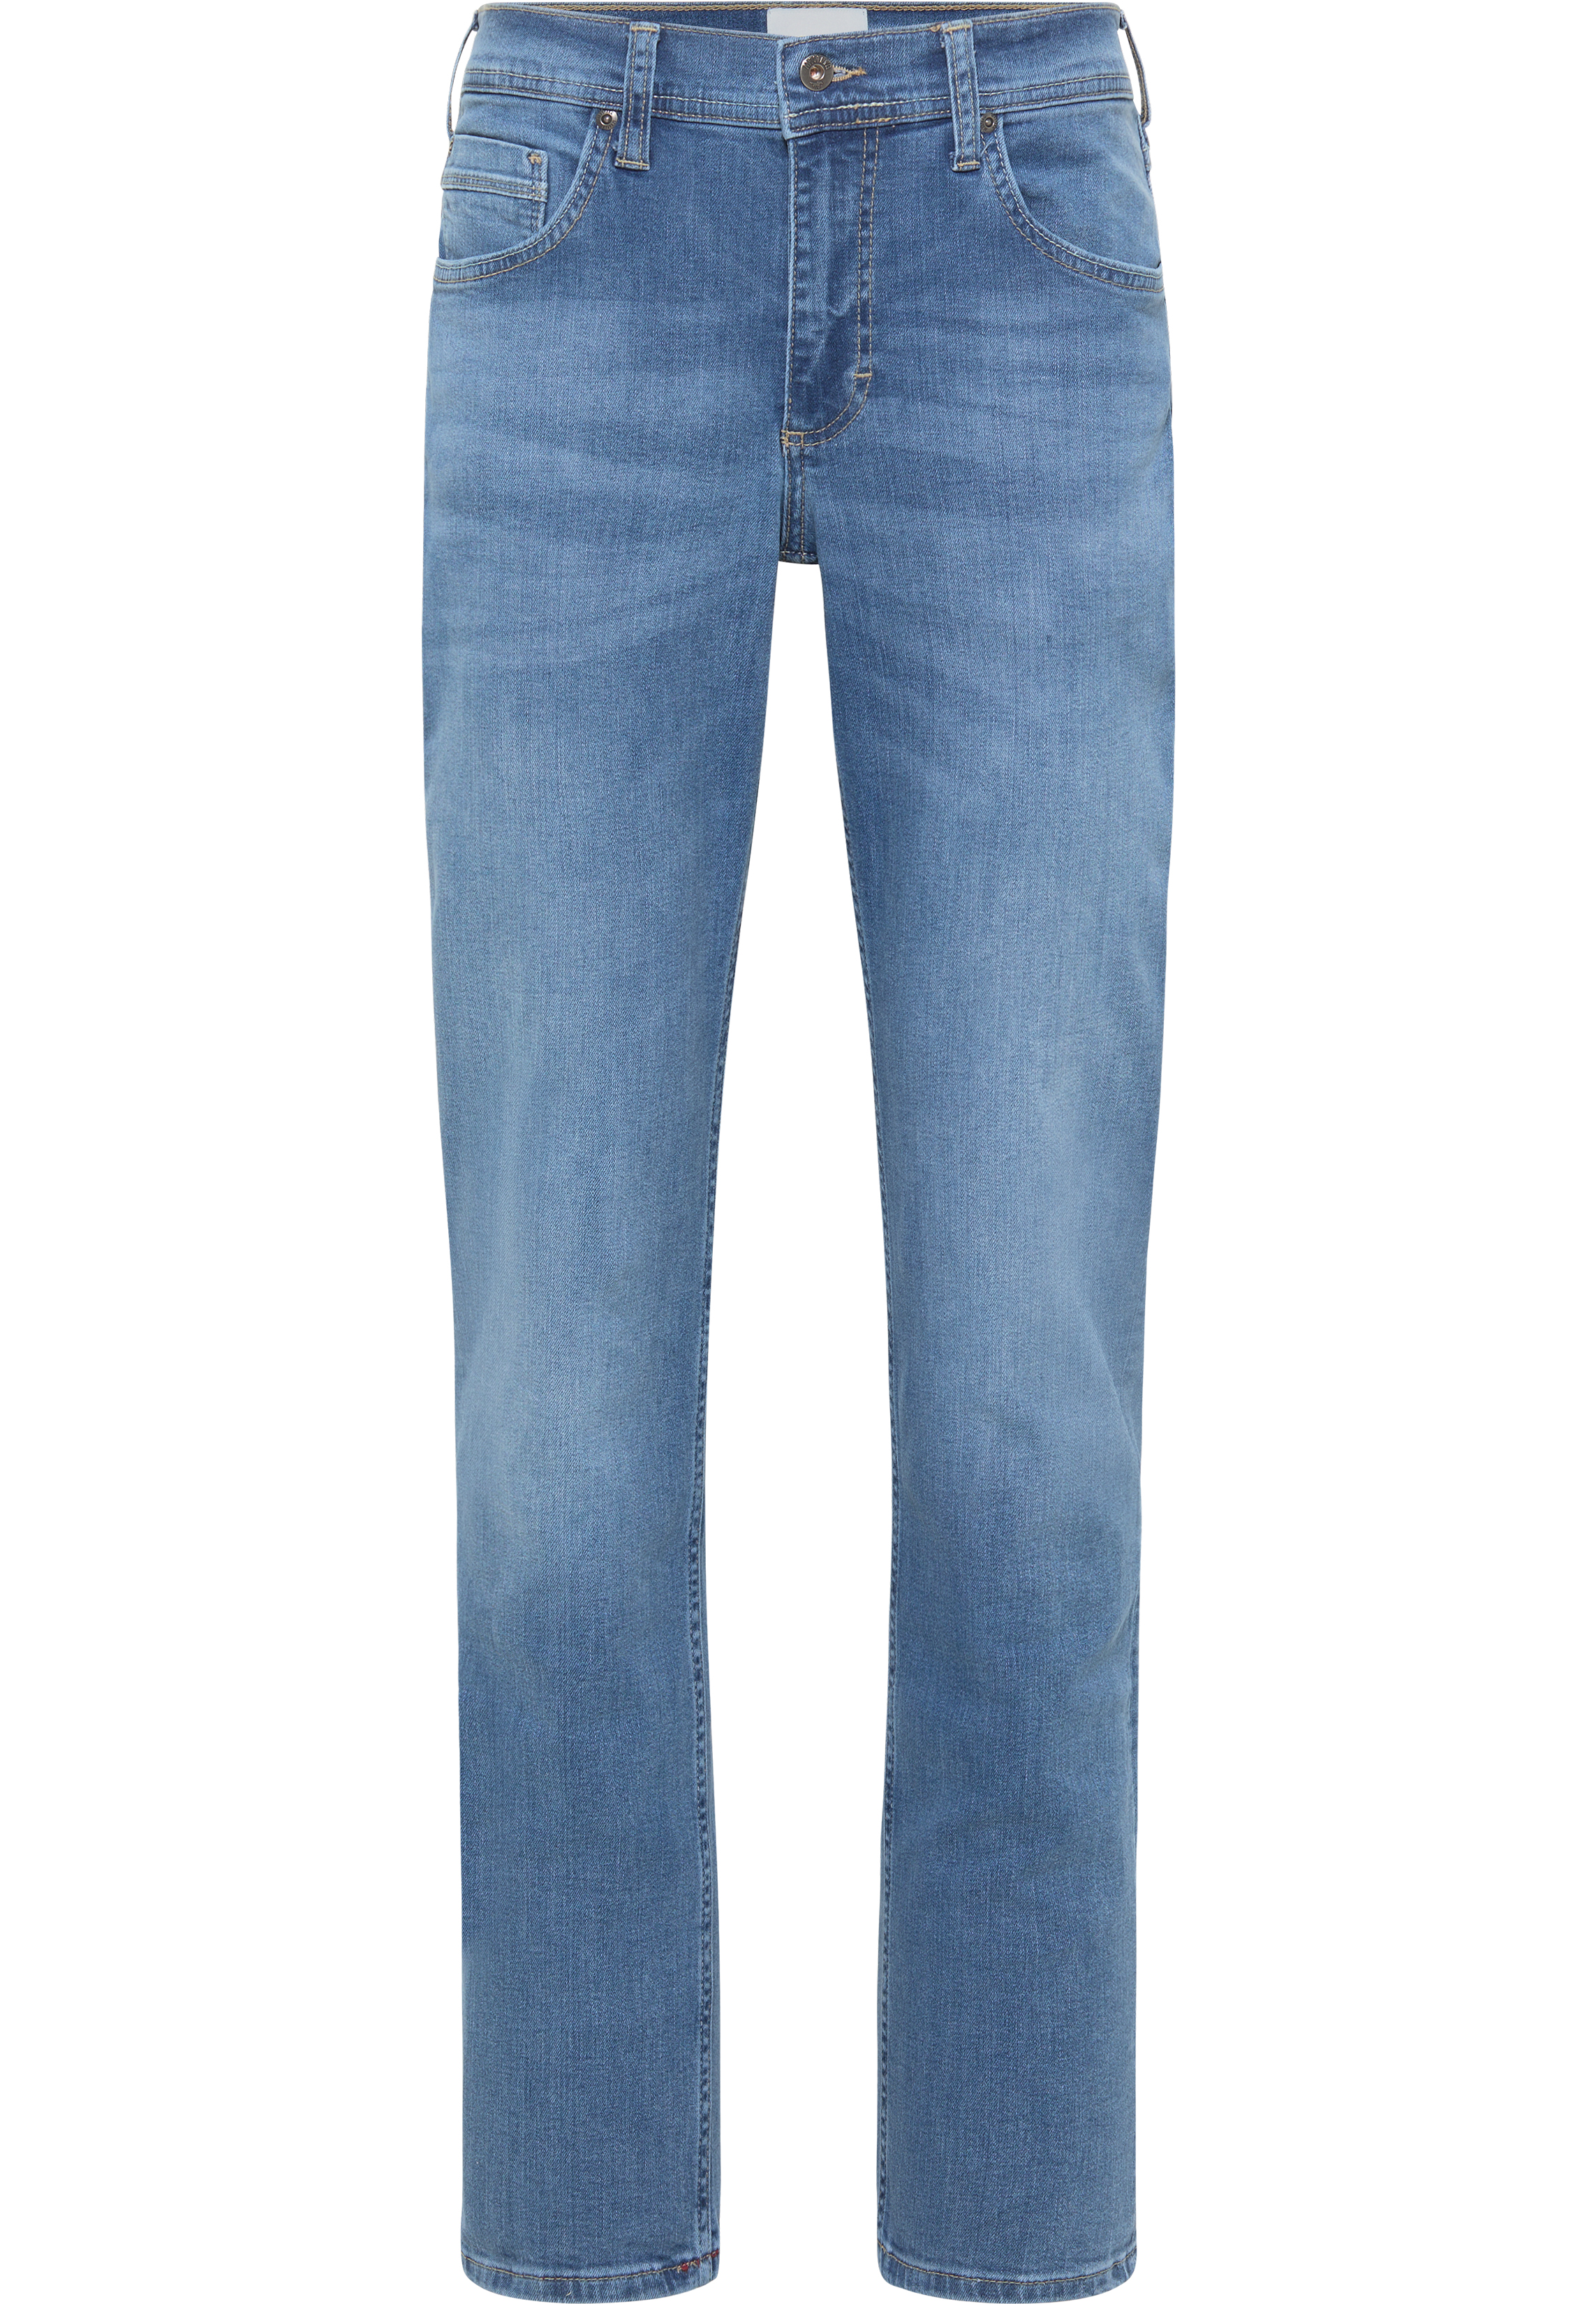 MUSTANG Herren Jeanshose Tramper Slim Medium Straight 1002154 Jeans Blau 312 